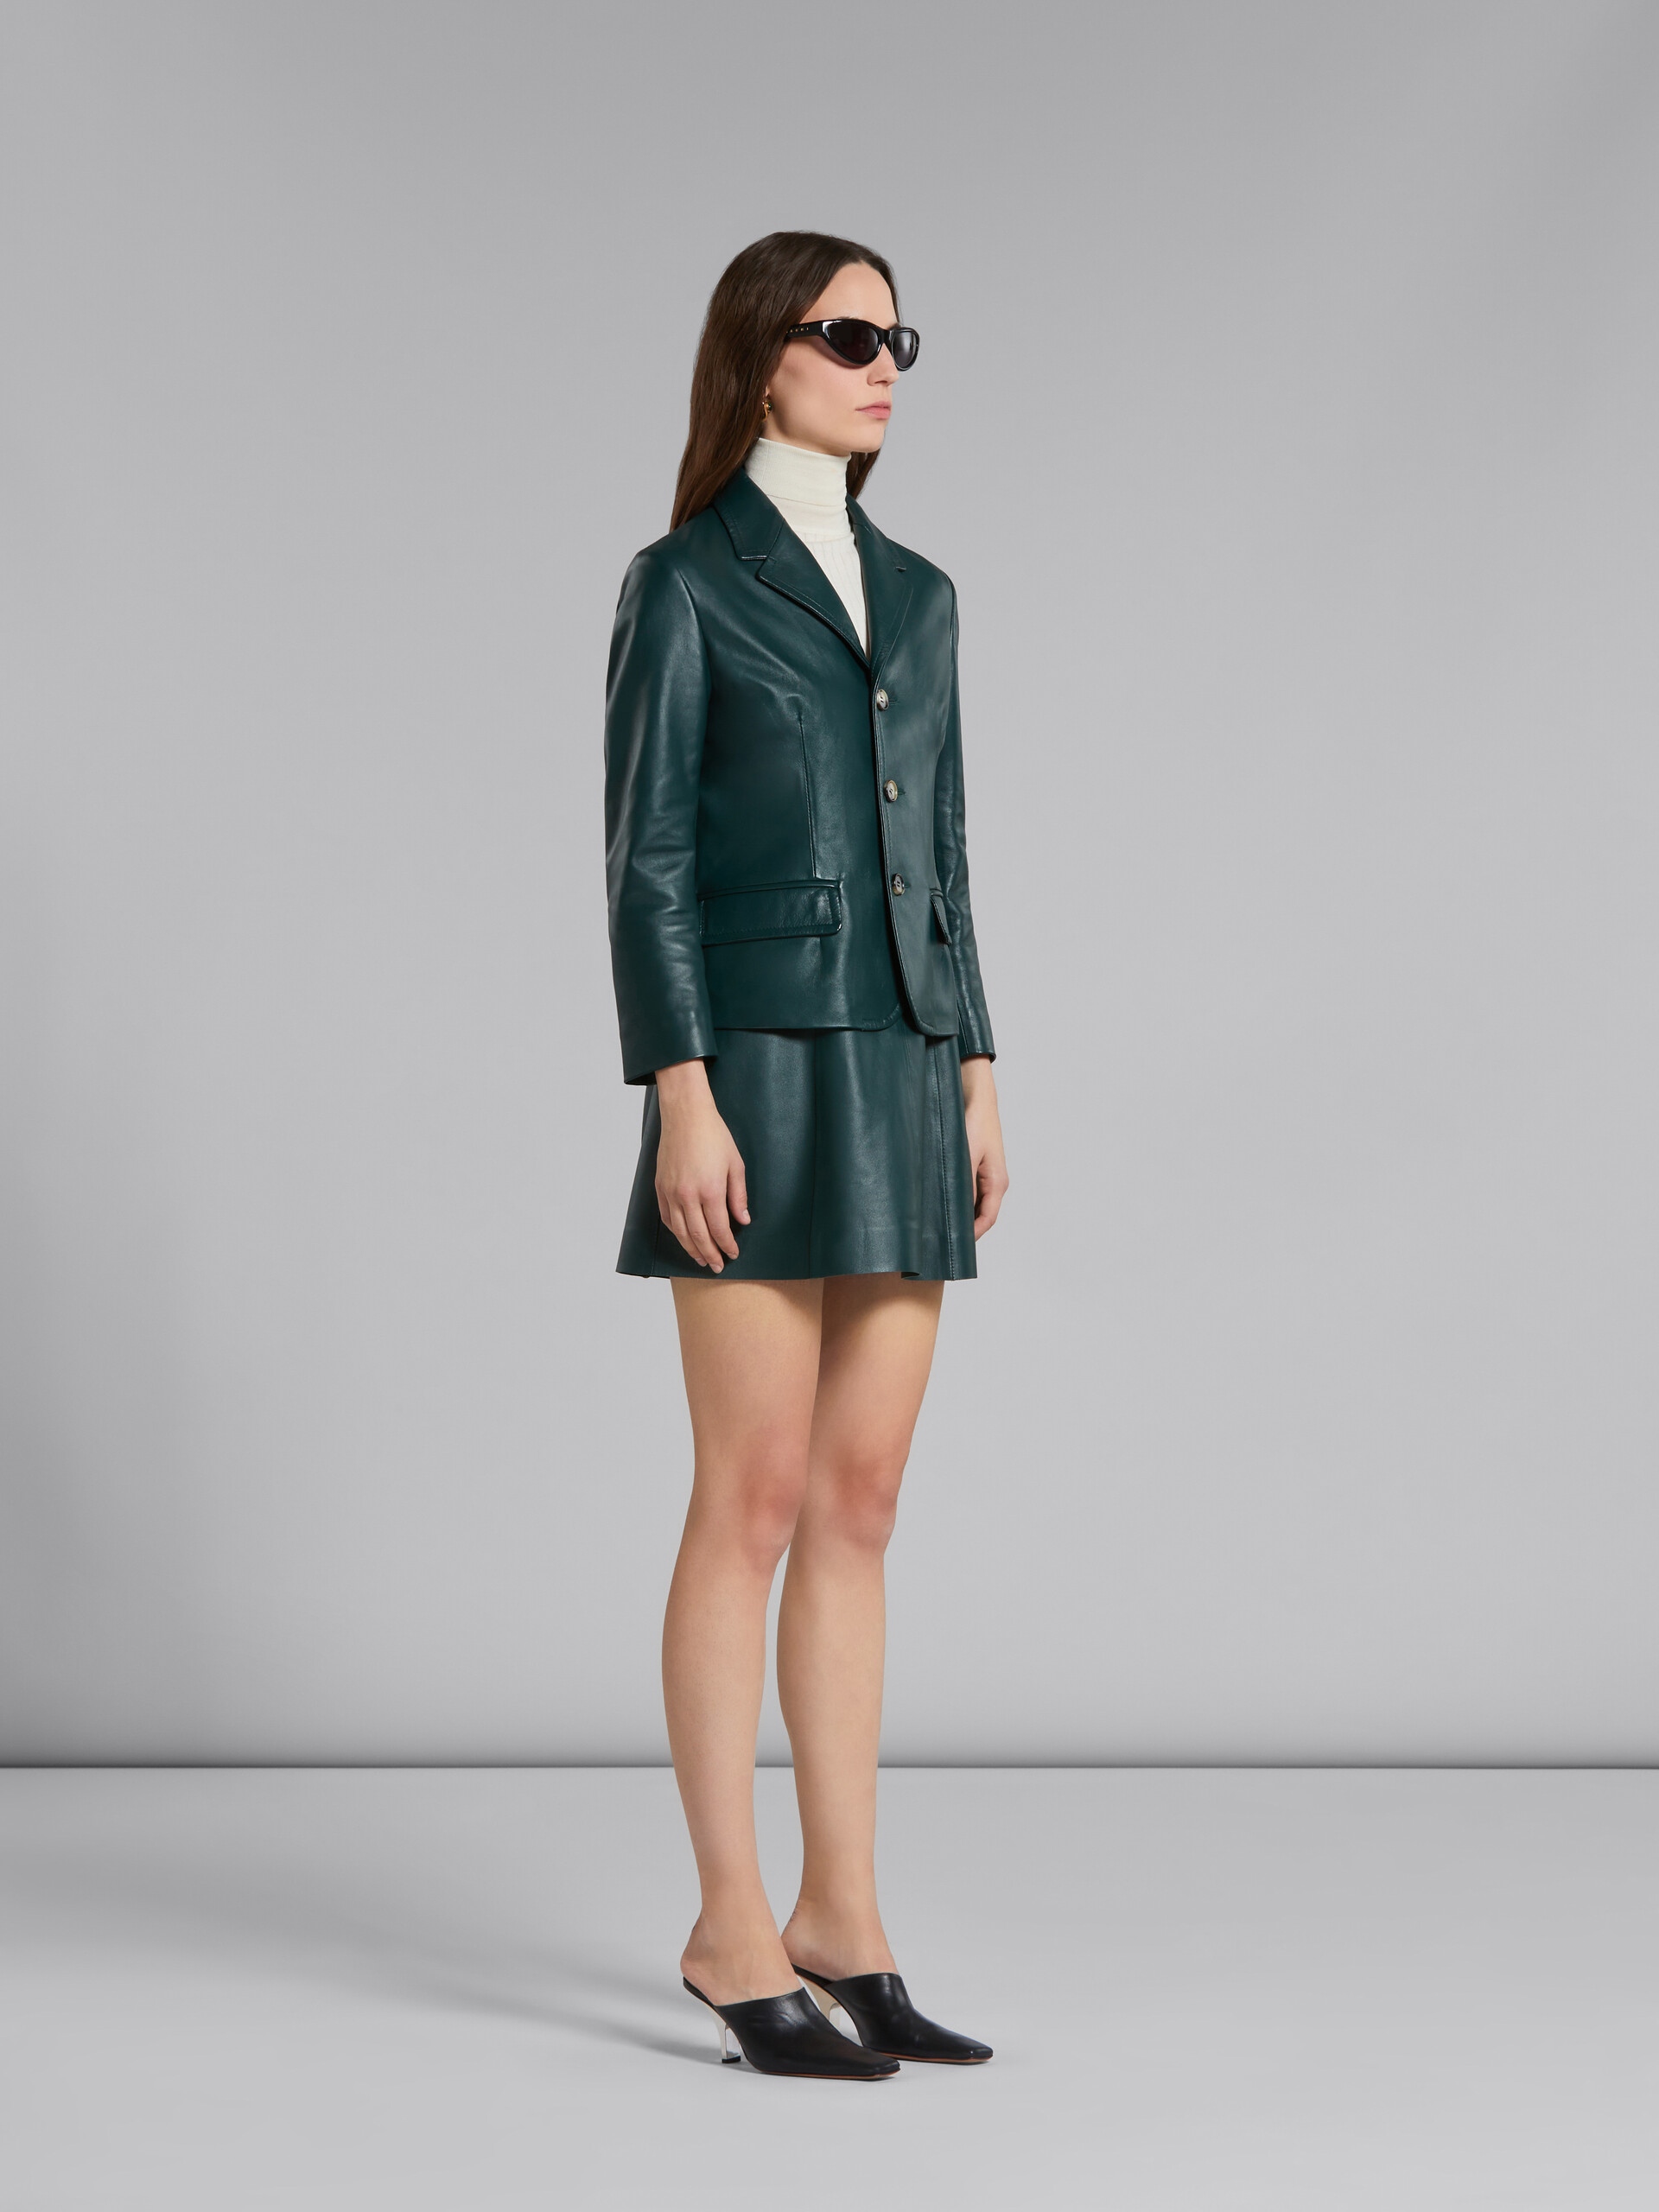 Kleid aus grünem Leder mit V-Ausschnitt - Kleider - Image 6